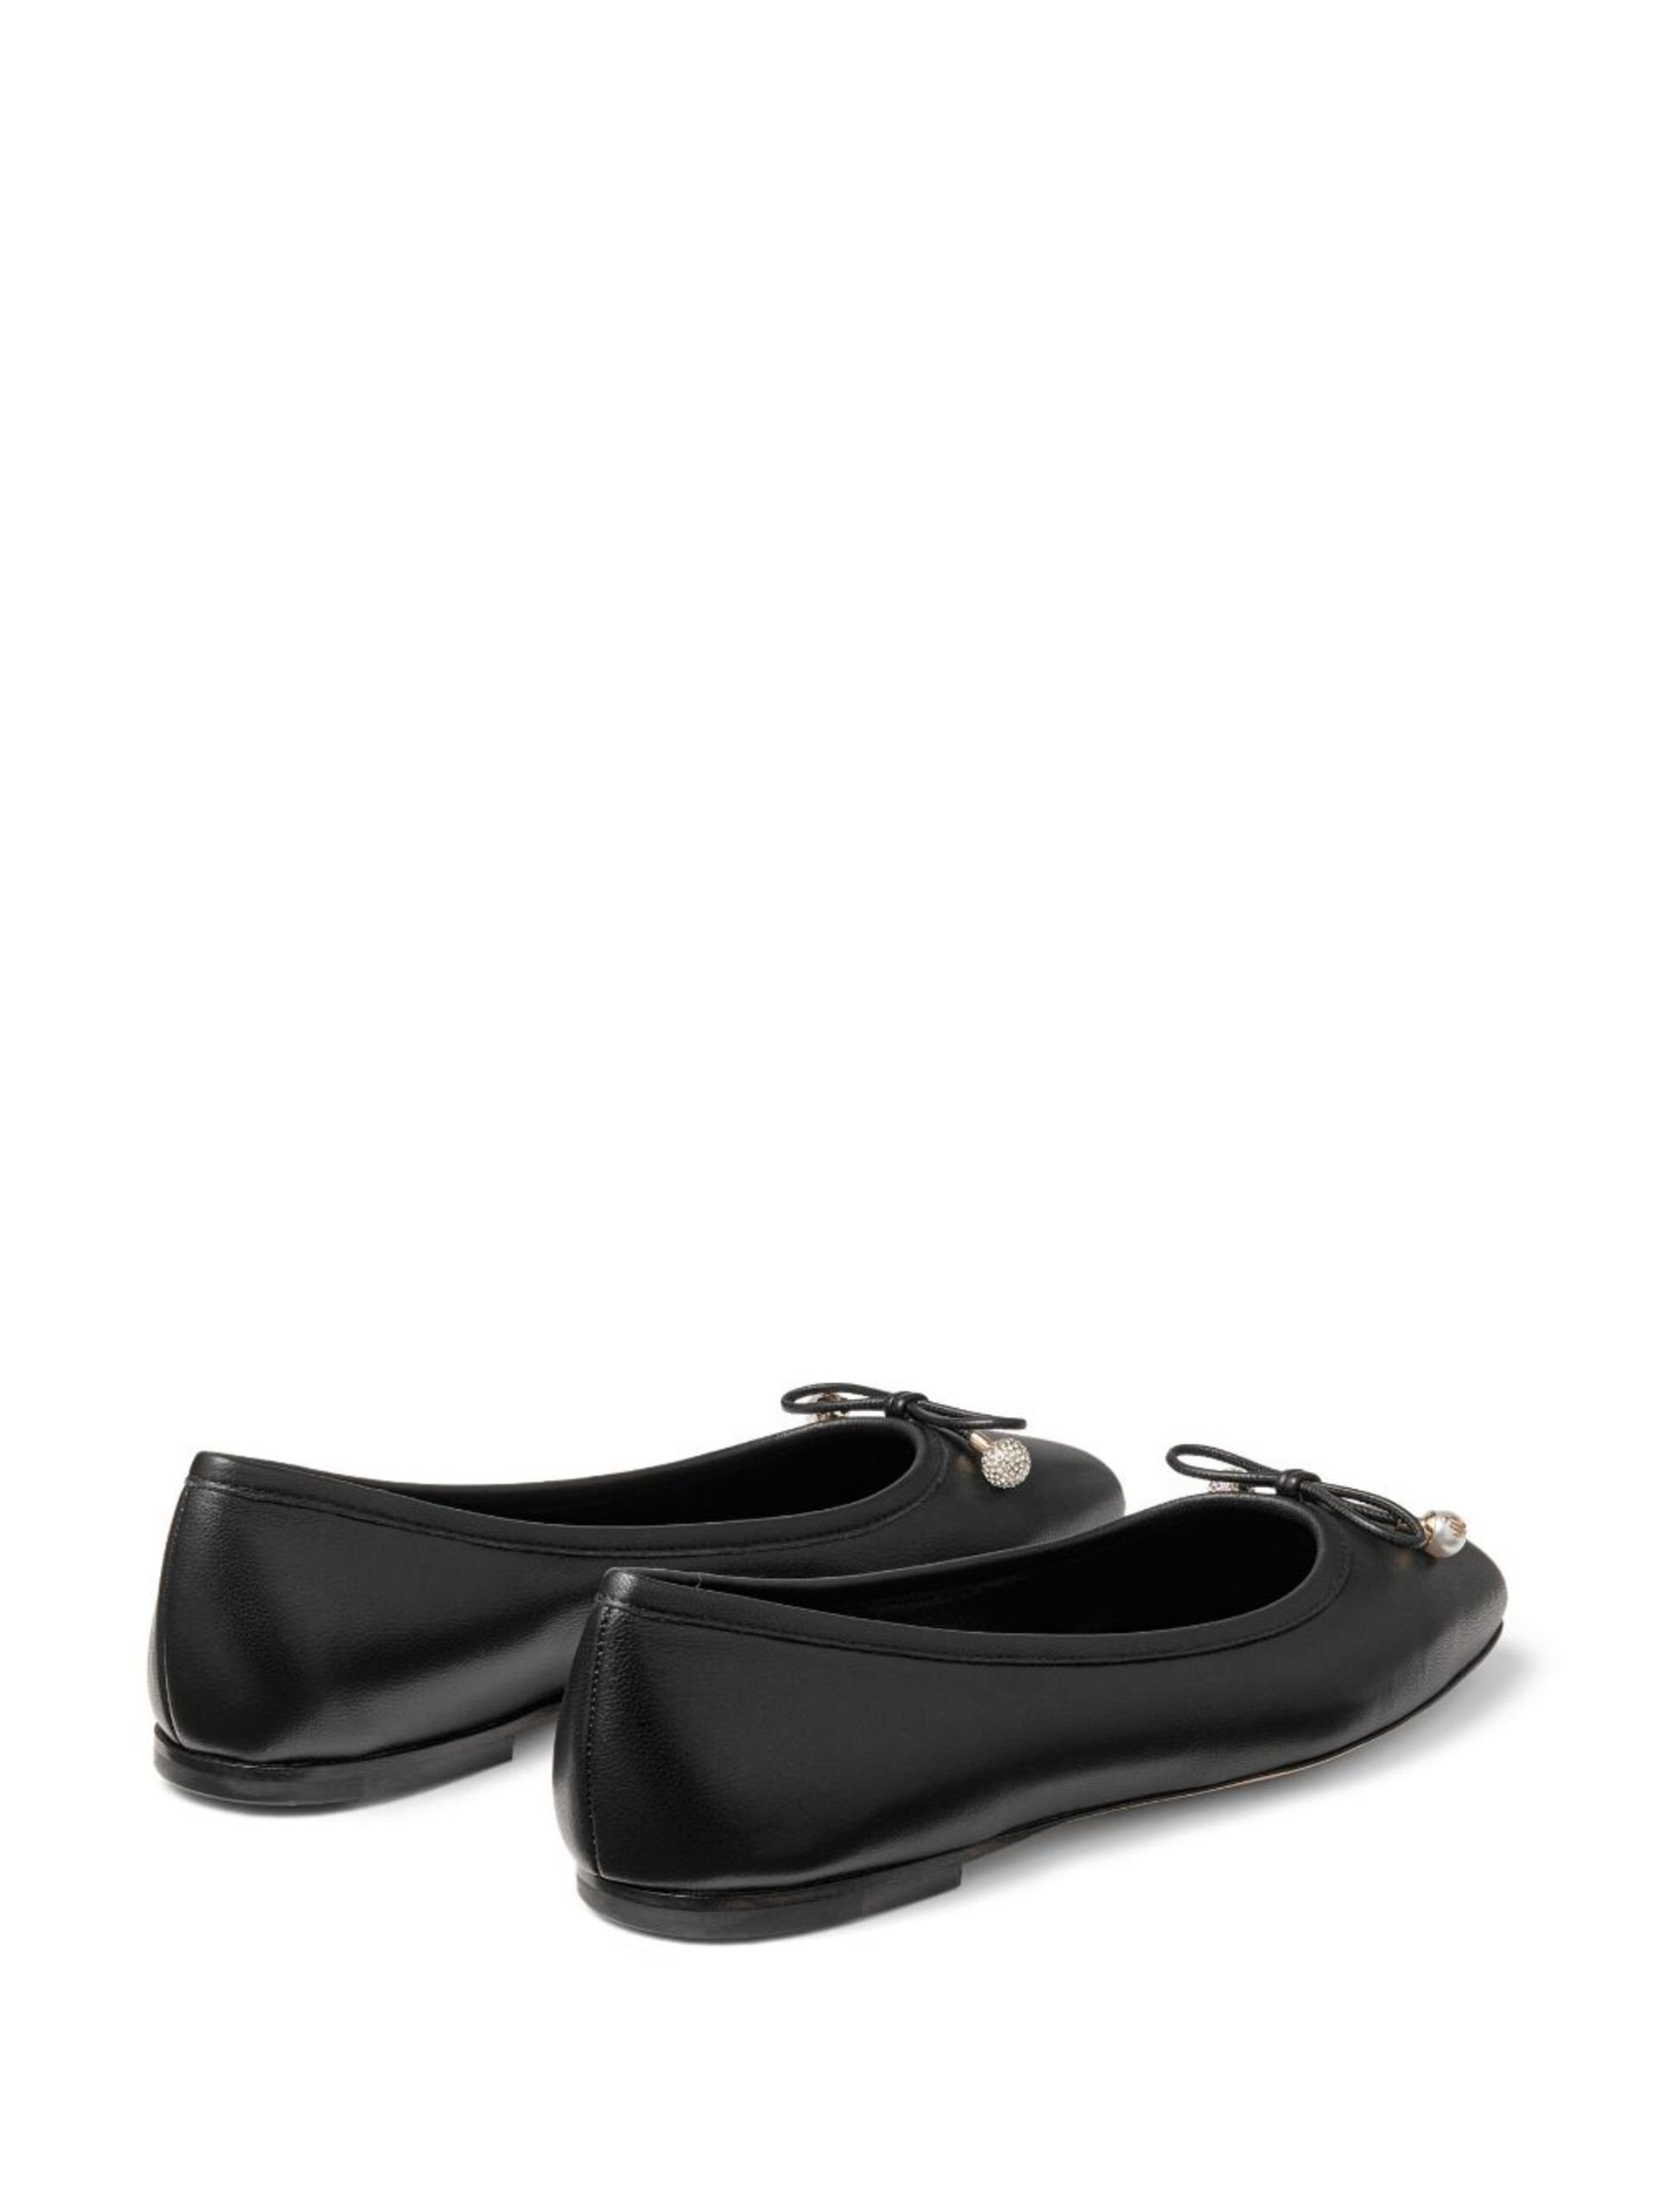 Black Elme Leather Ballerina Shoes - 3